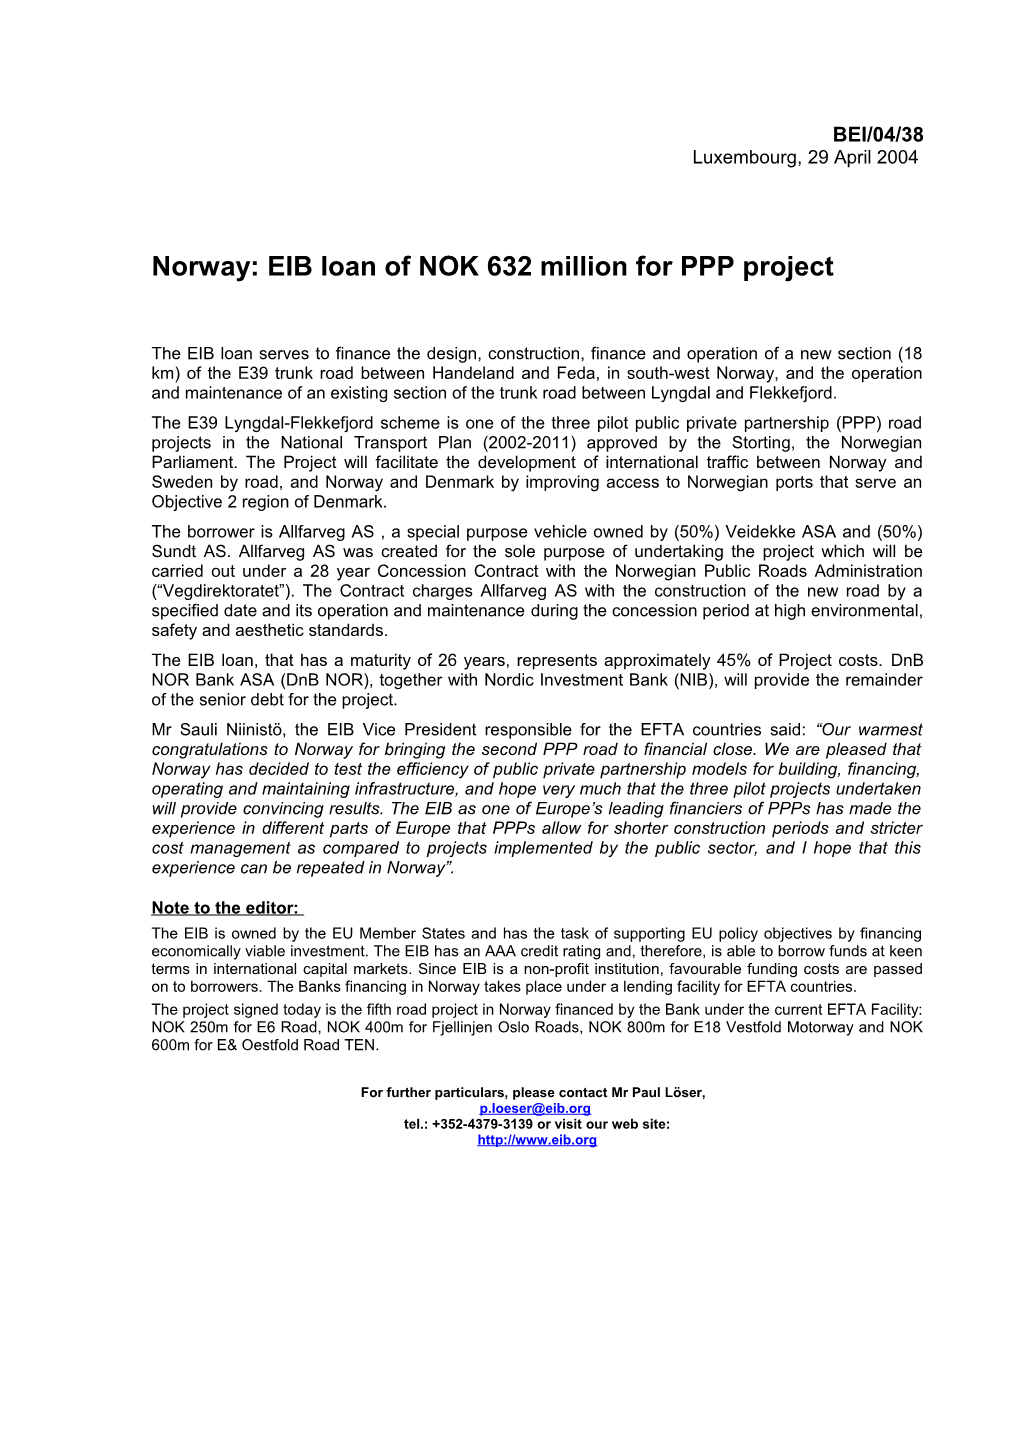 Norway: EIB Loan Ofnok 632 Million for PPP Project